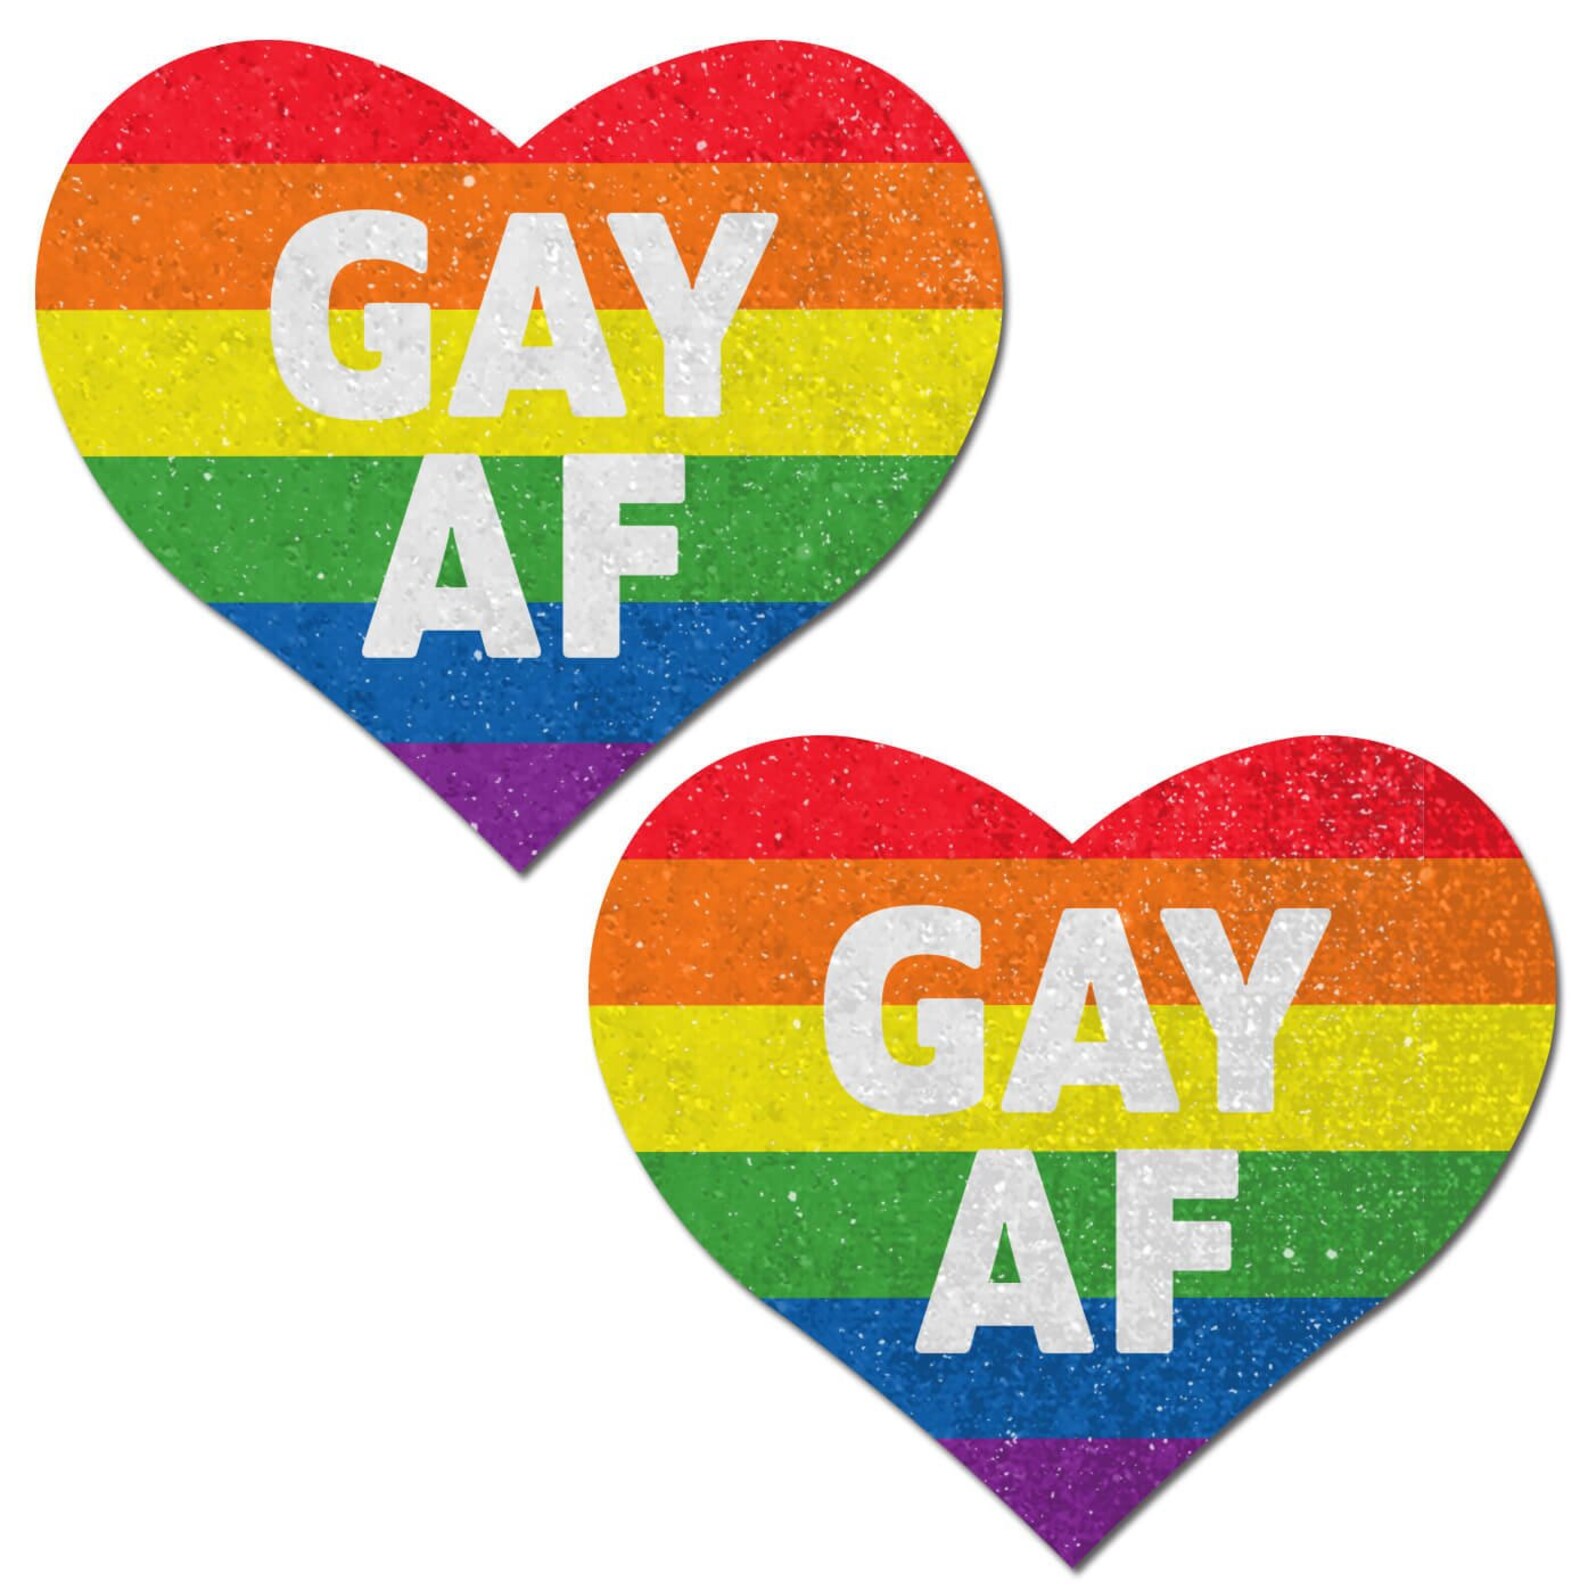 #gay rainbow text meme